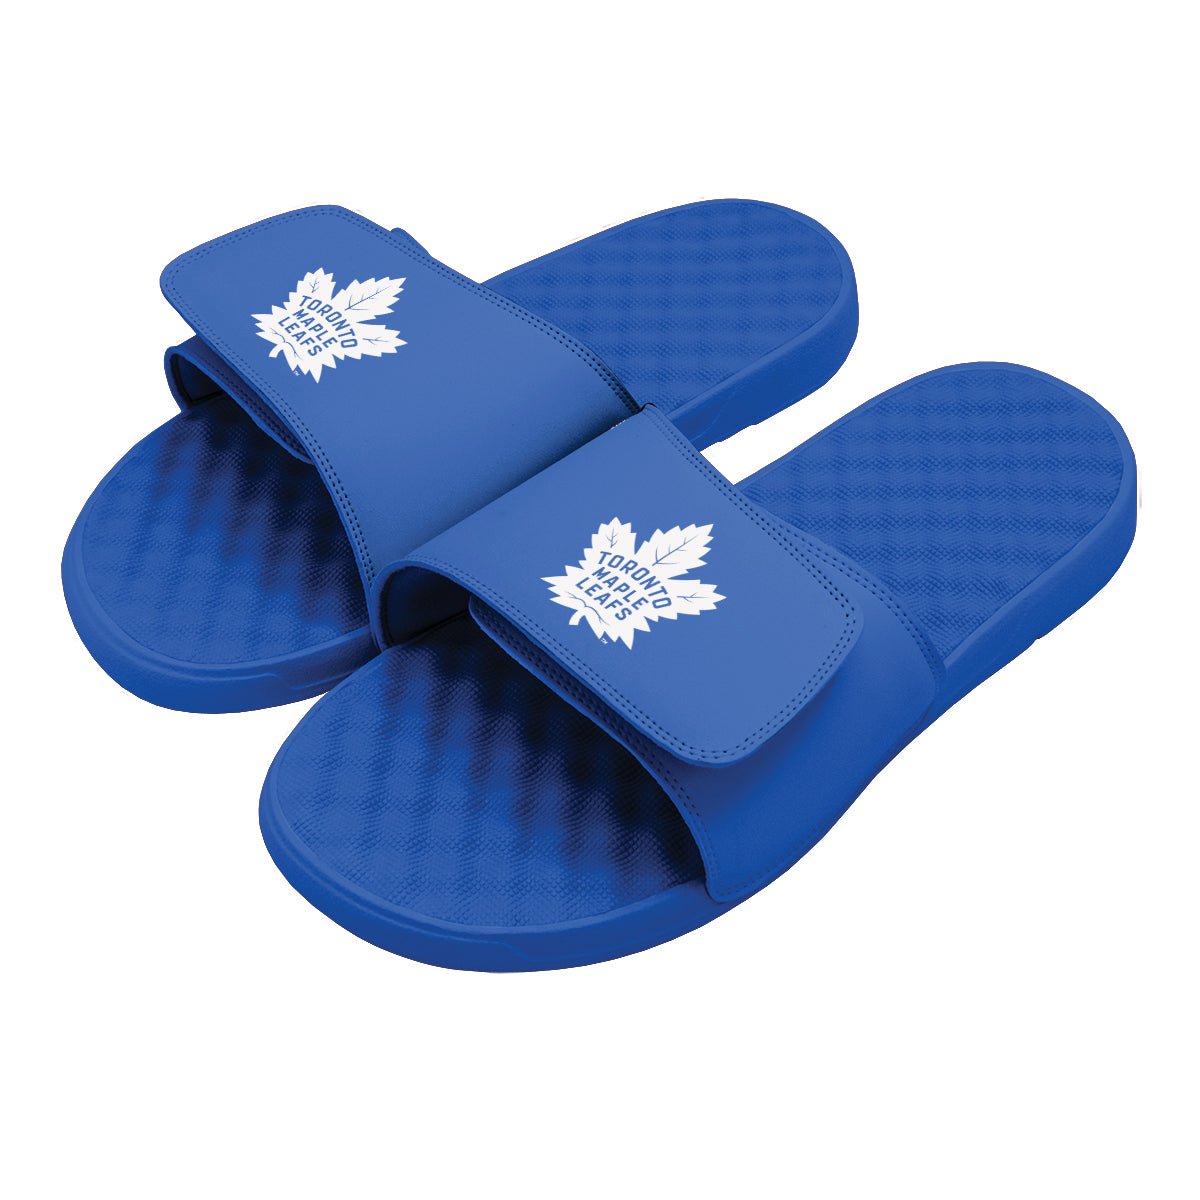 Toronto Maple Leafs Primary Slides